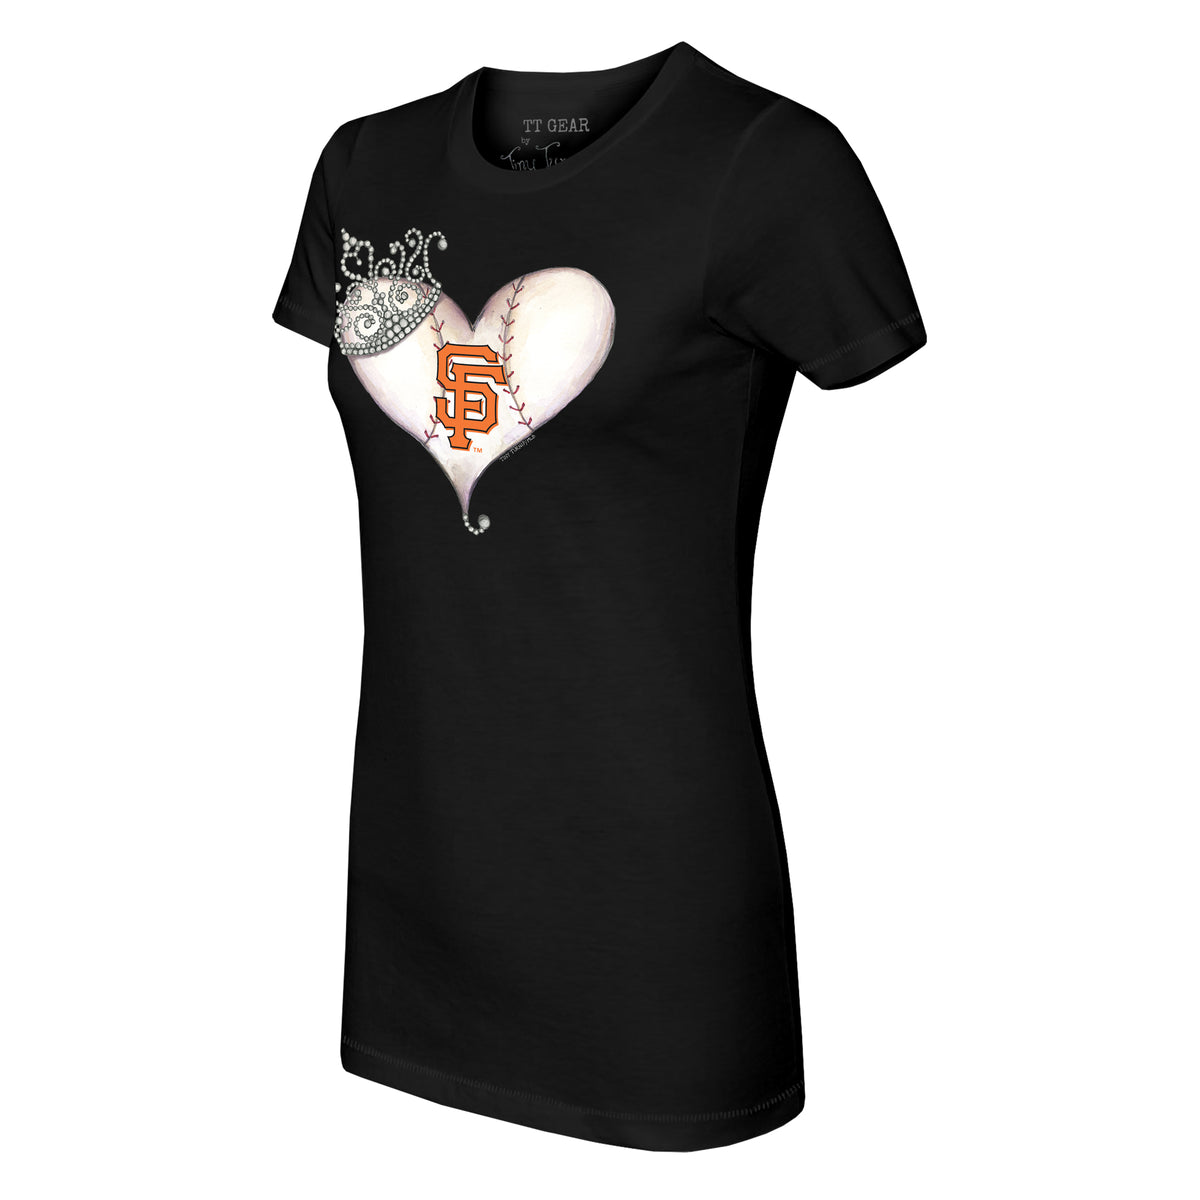 San Francisco Giants Heart Bat Tee Shirt Women's XS / Black